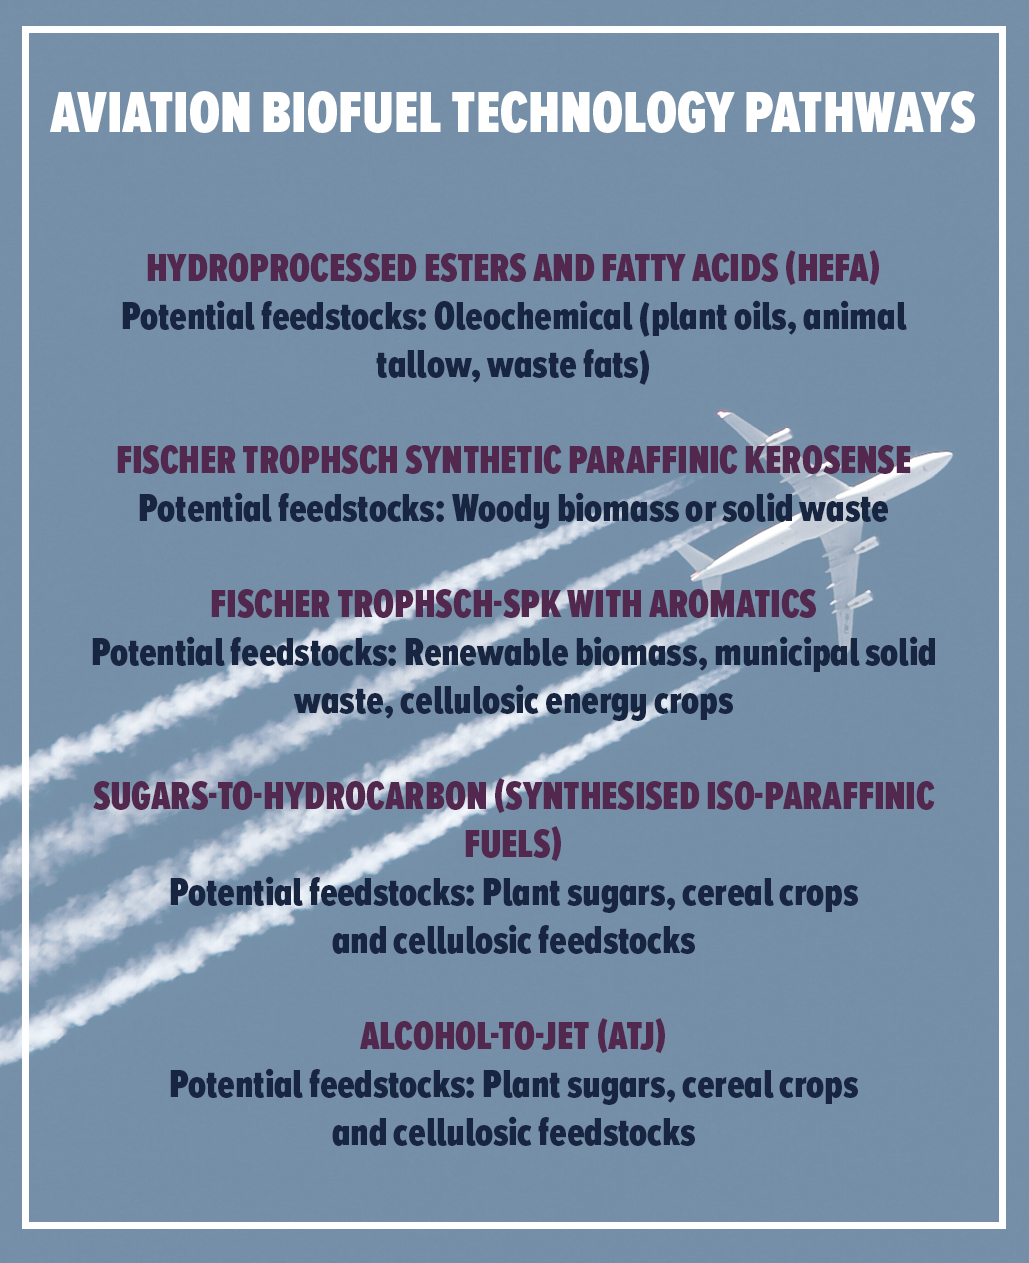 Aviation Biofuels Technology Pathways